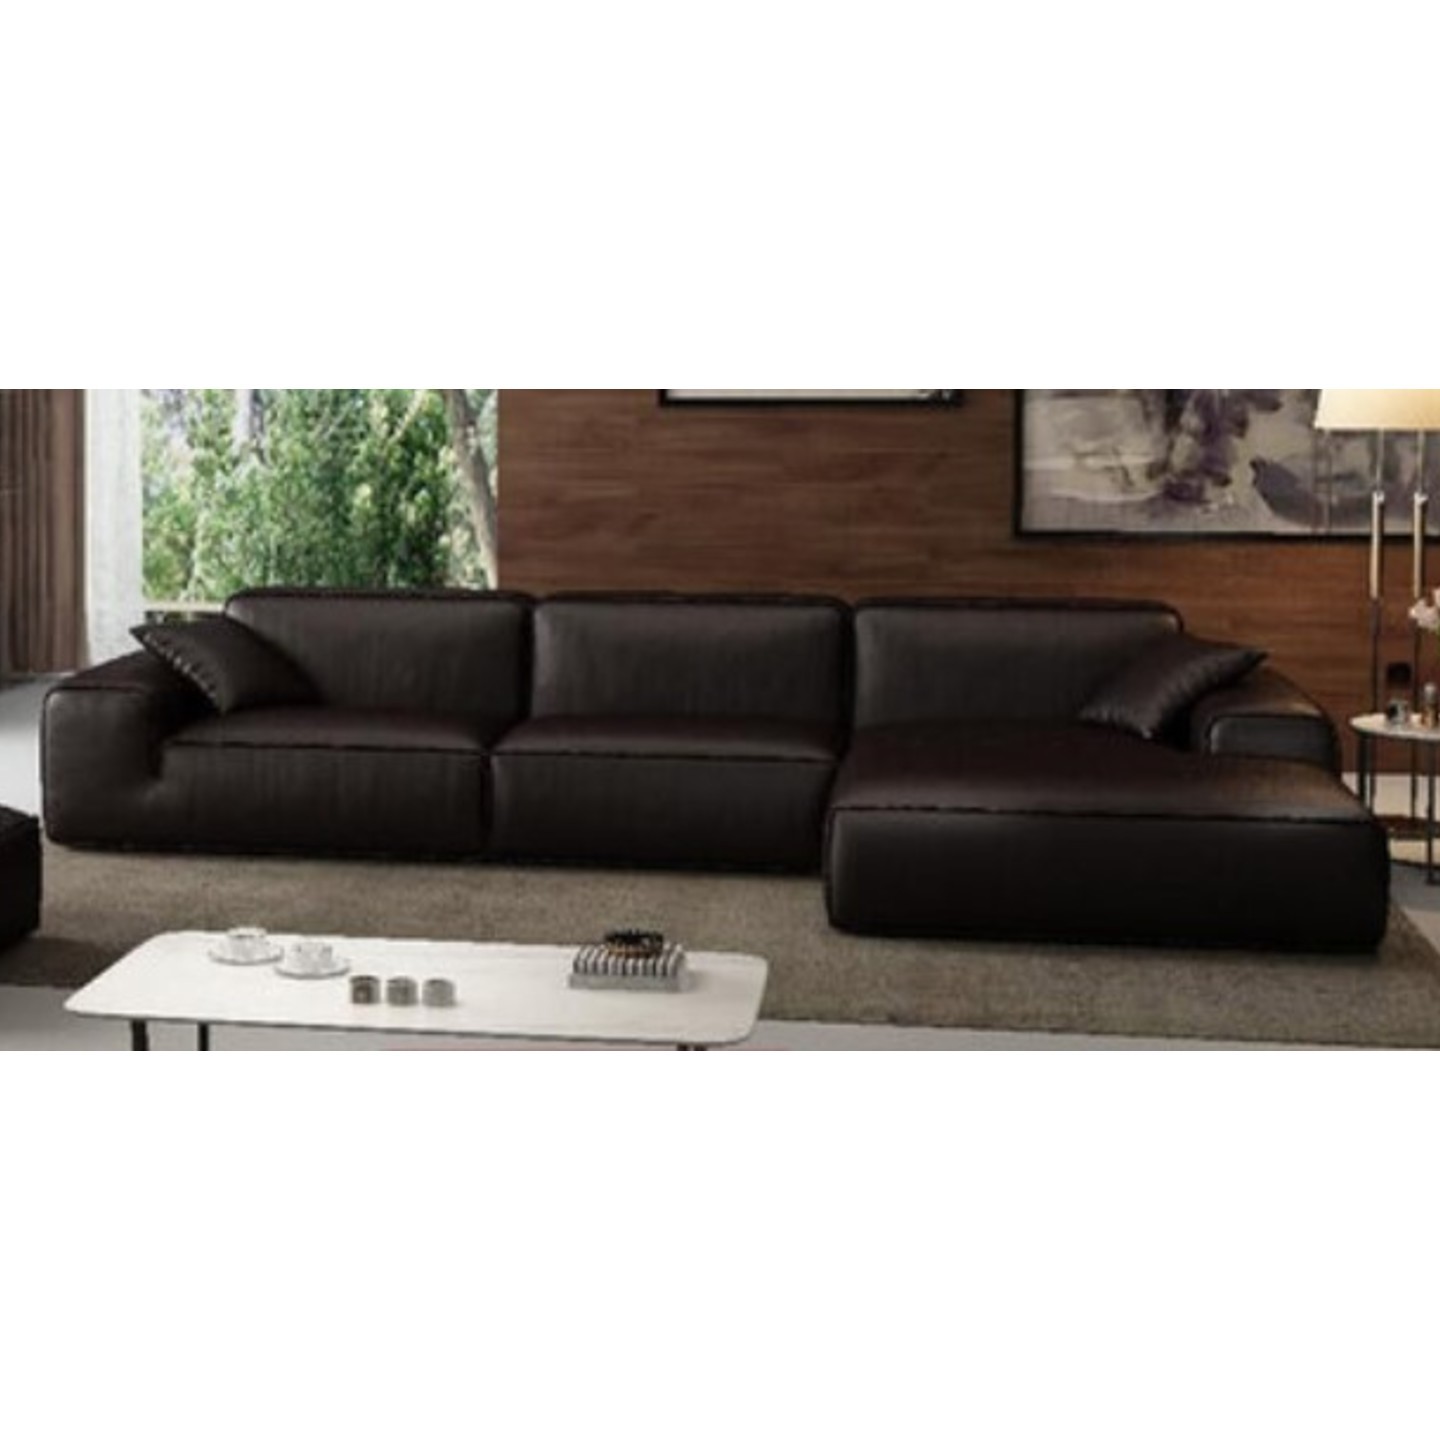 Merino Nordic Style Luxury Sofa Full Leather - 3 + Concubine Seat L Shaped